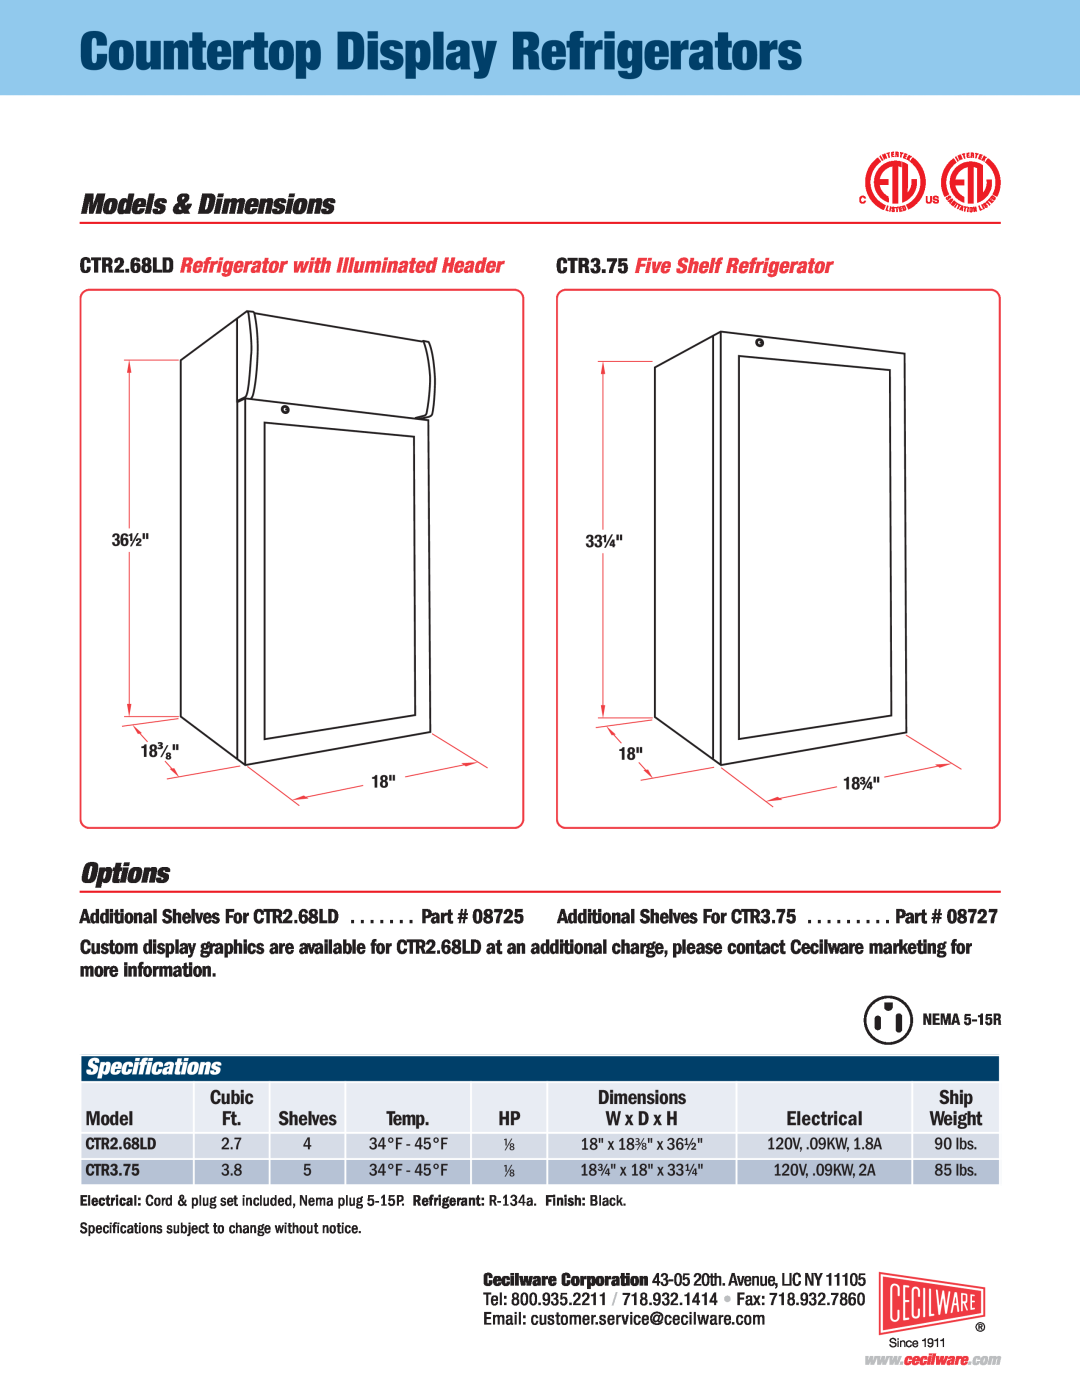 Cecilware 08725, CTR2.68LD, CTR3.75, NQ75A Countertop Display Refrigerators, Models & Dimensions, Options, Speciﬁcations 